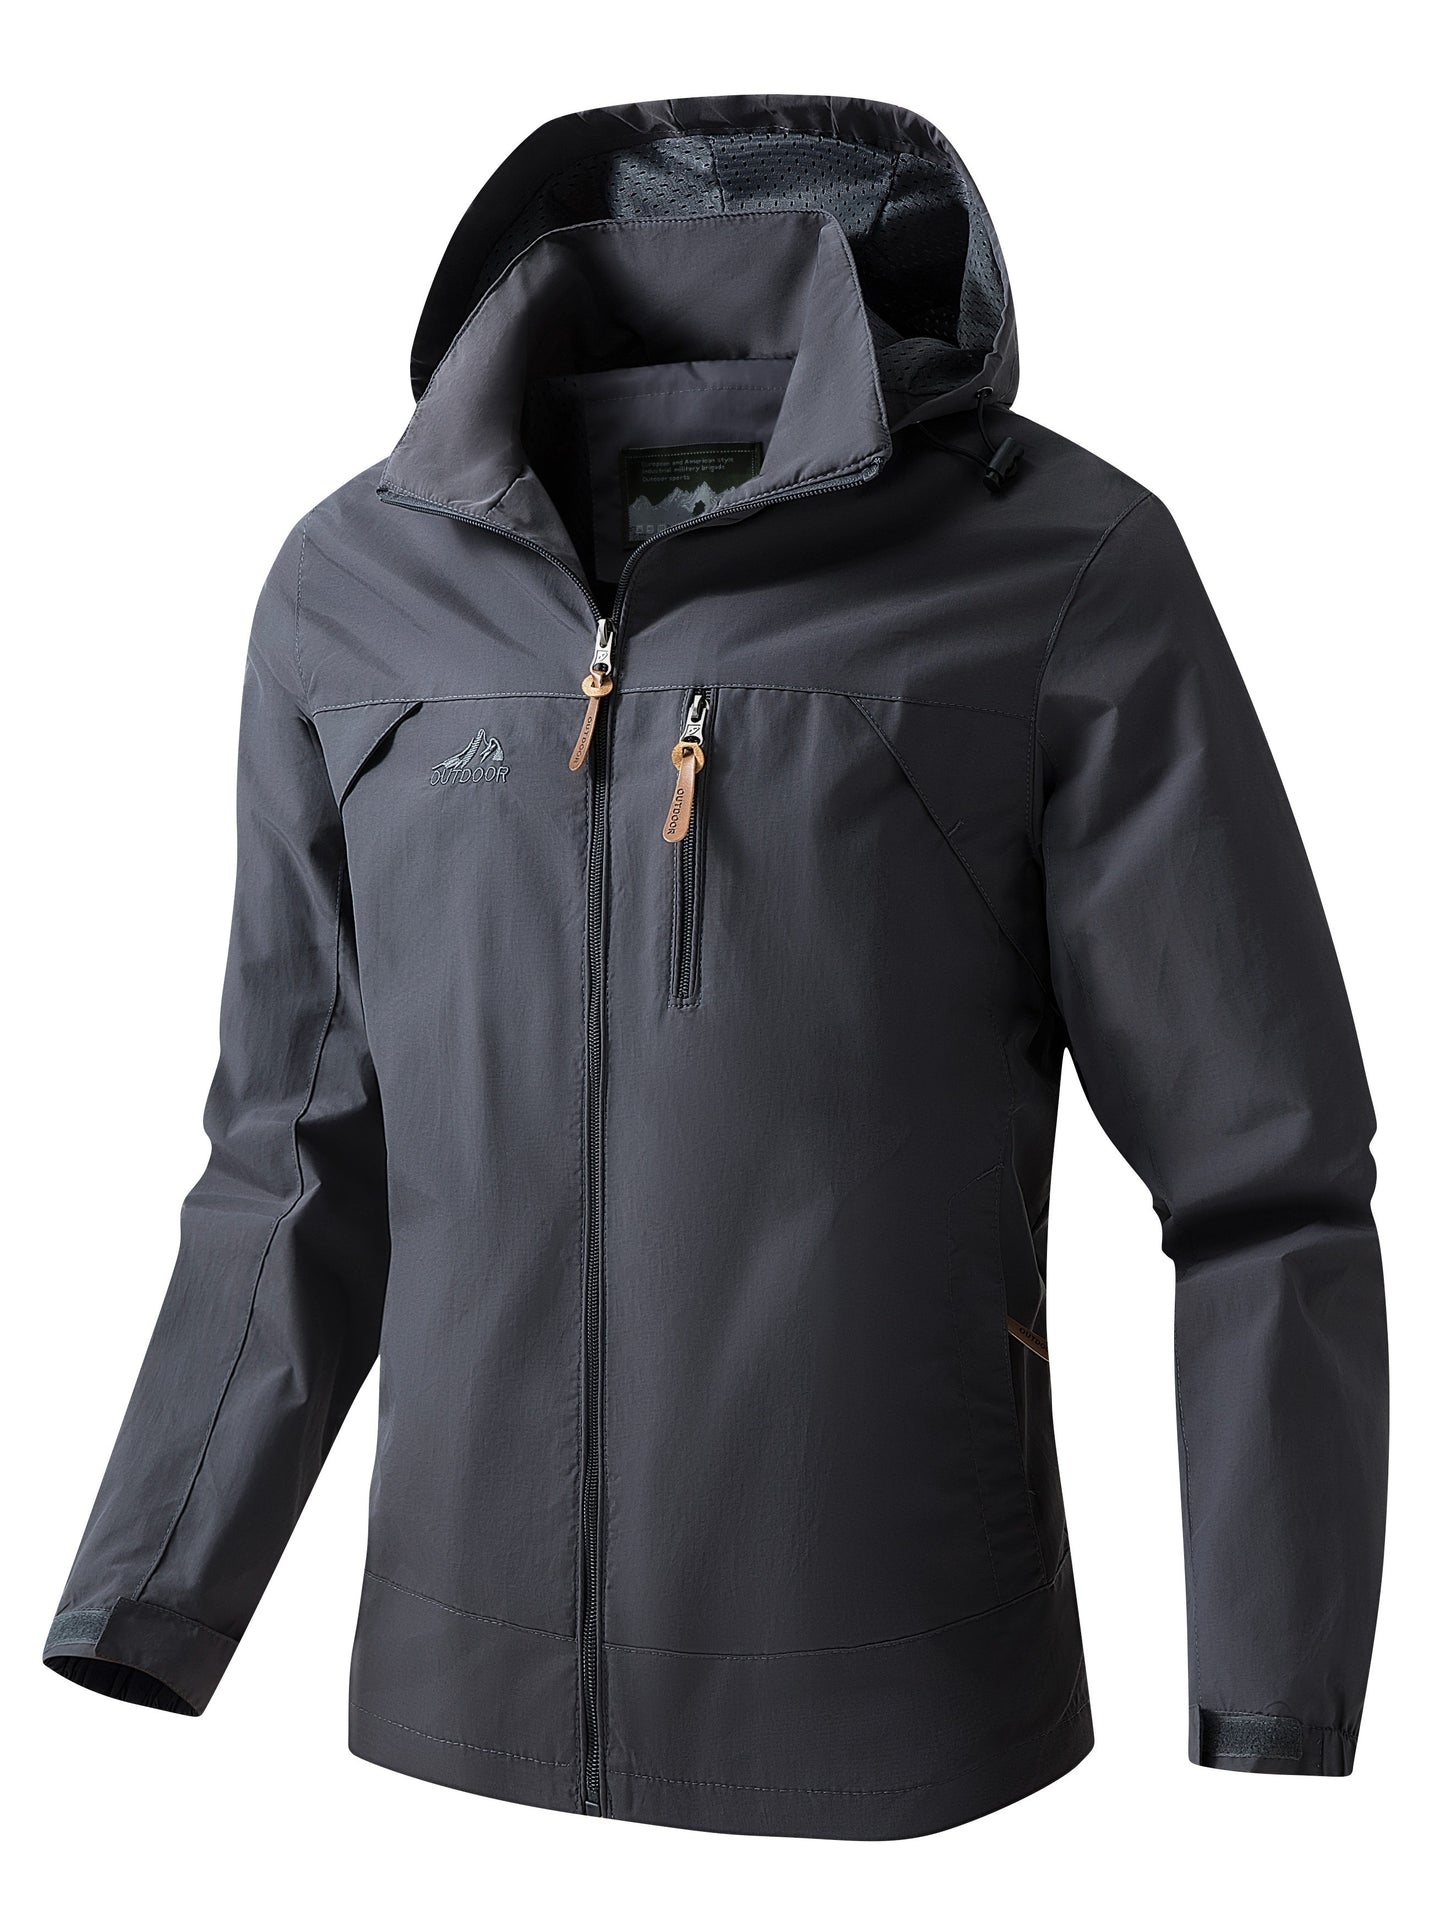 Men's Waterproof Windproof Hooded Jackets Outdoor Sports Jacket For Spring Autumn